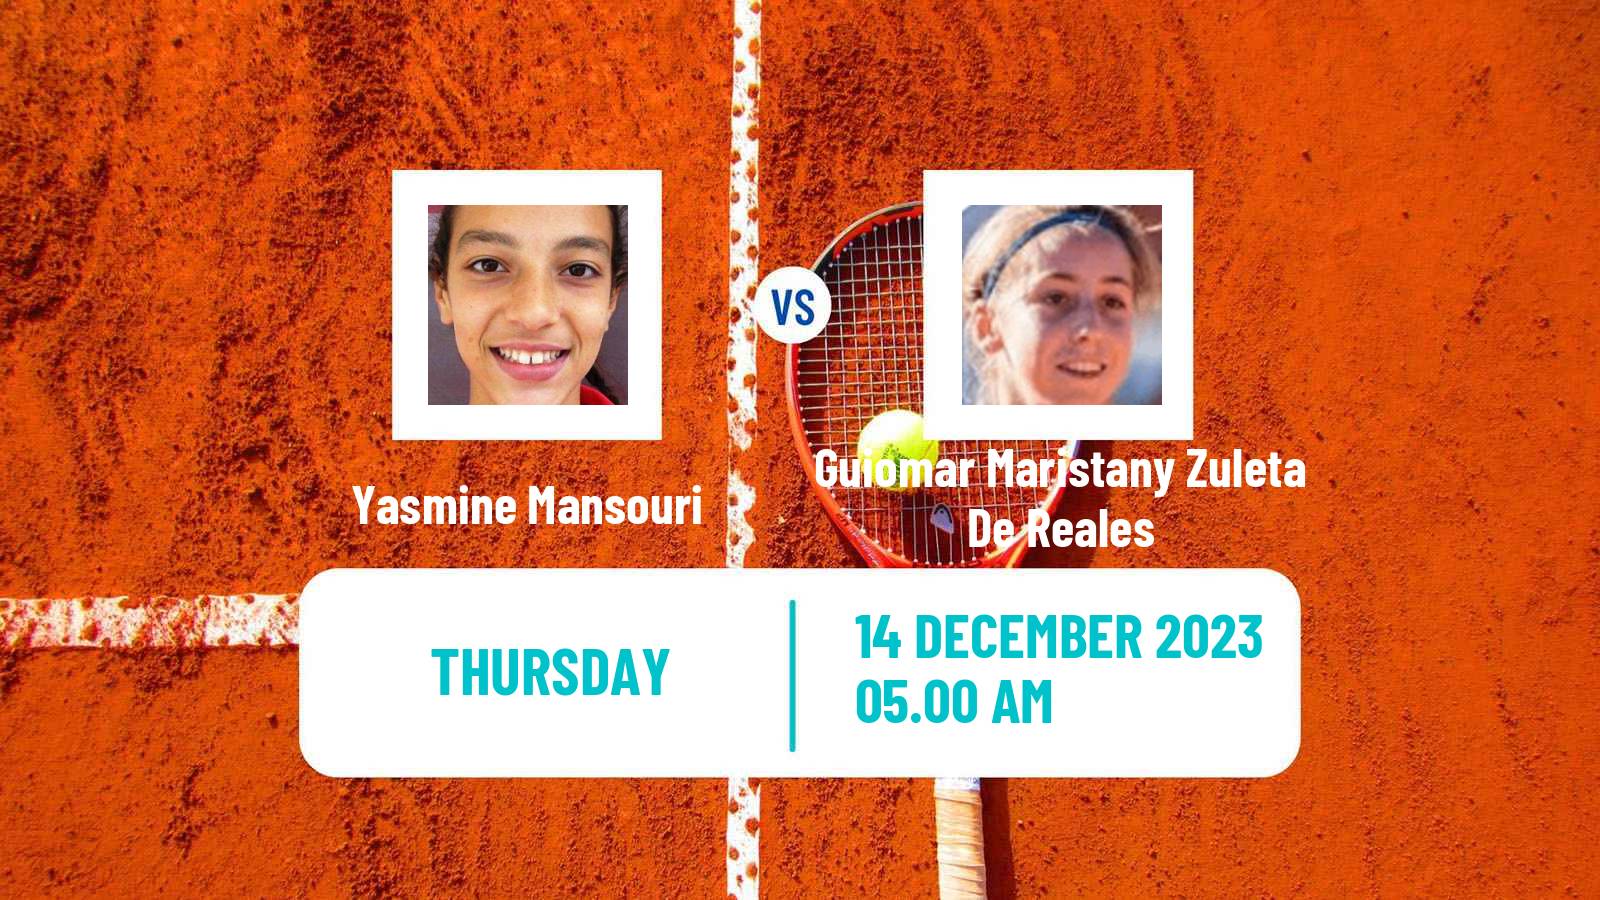 Tennis ITF W25 Monastir 6 Women Yasmine Mansouri - Guiomar Maristany Zuleta De Reales